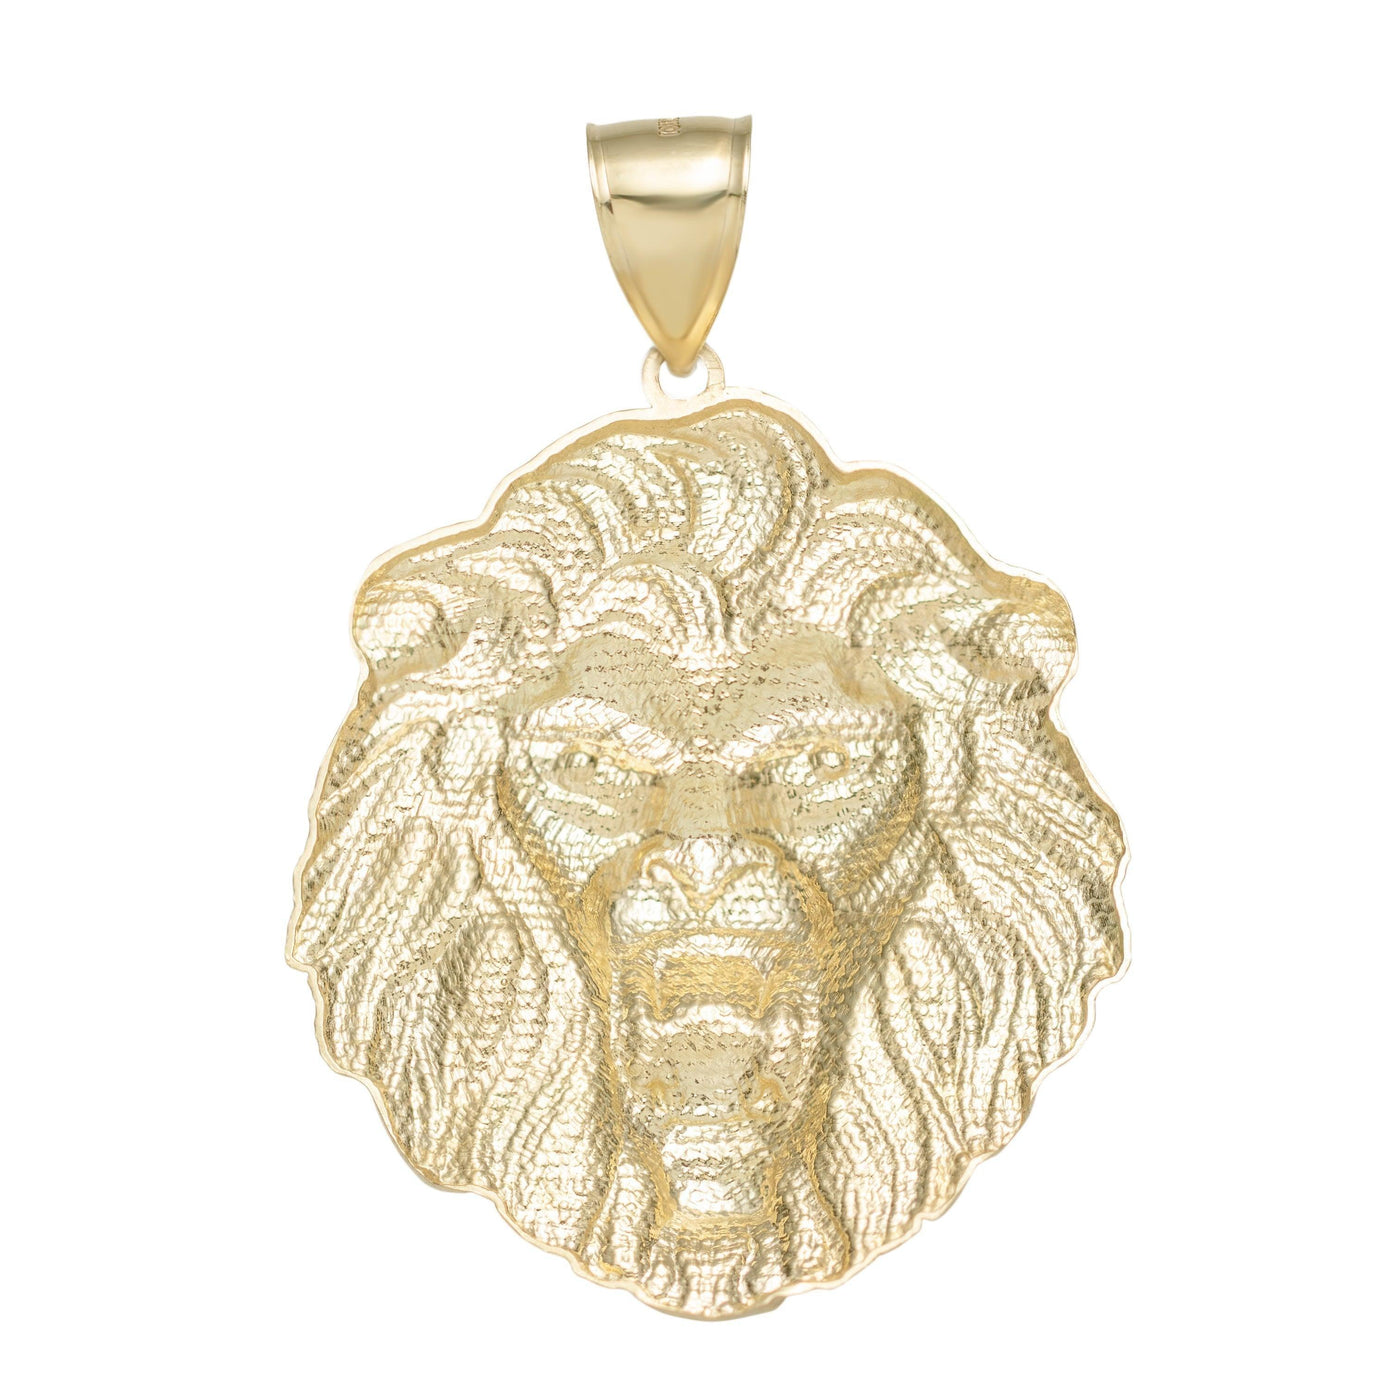 2 1/2" Textured Roaring Lion Head Charm Pendant 10K Yellow Gold - bayamjewelry